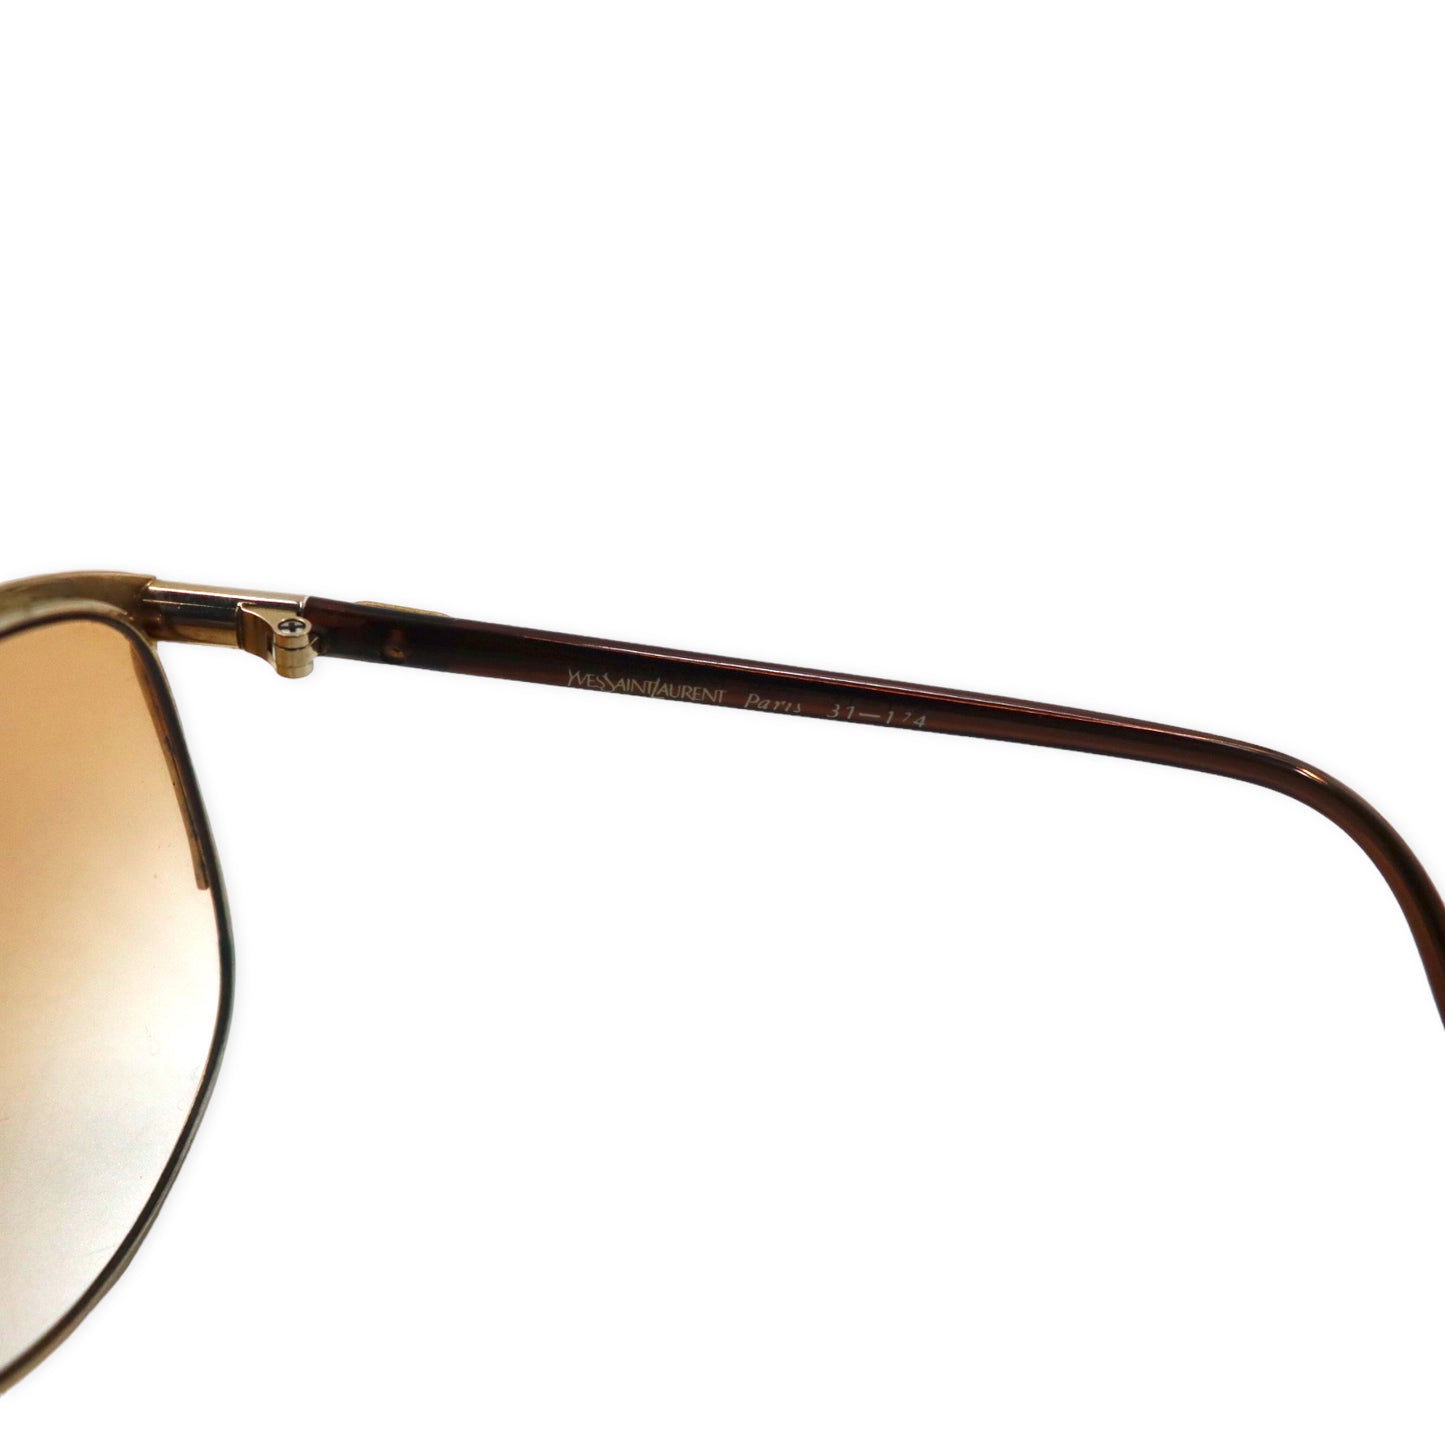 Yves Saint Laurent Sunglasses Tear Drop Metal Frame Gold YSL 31 